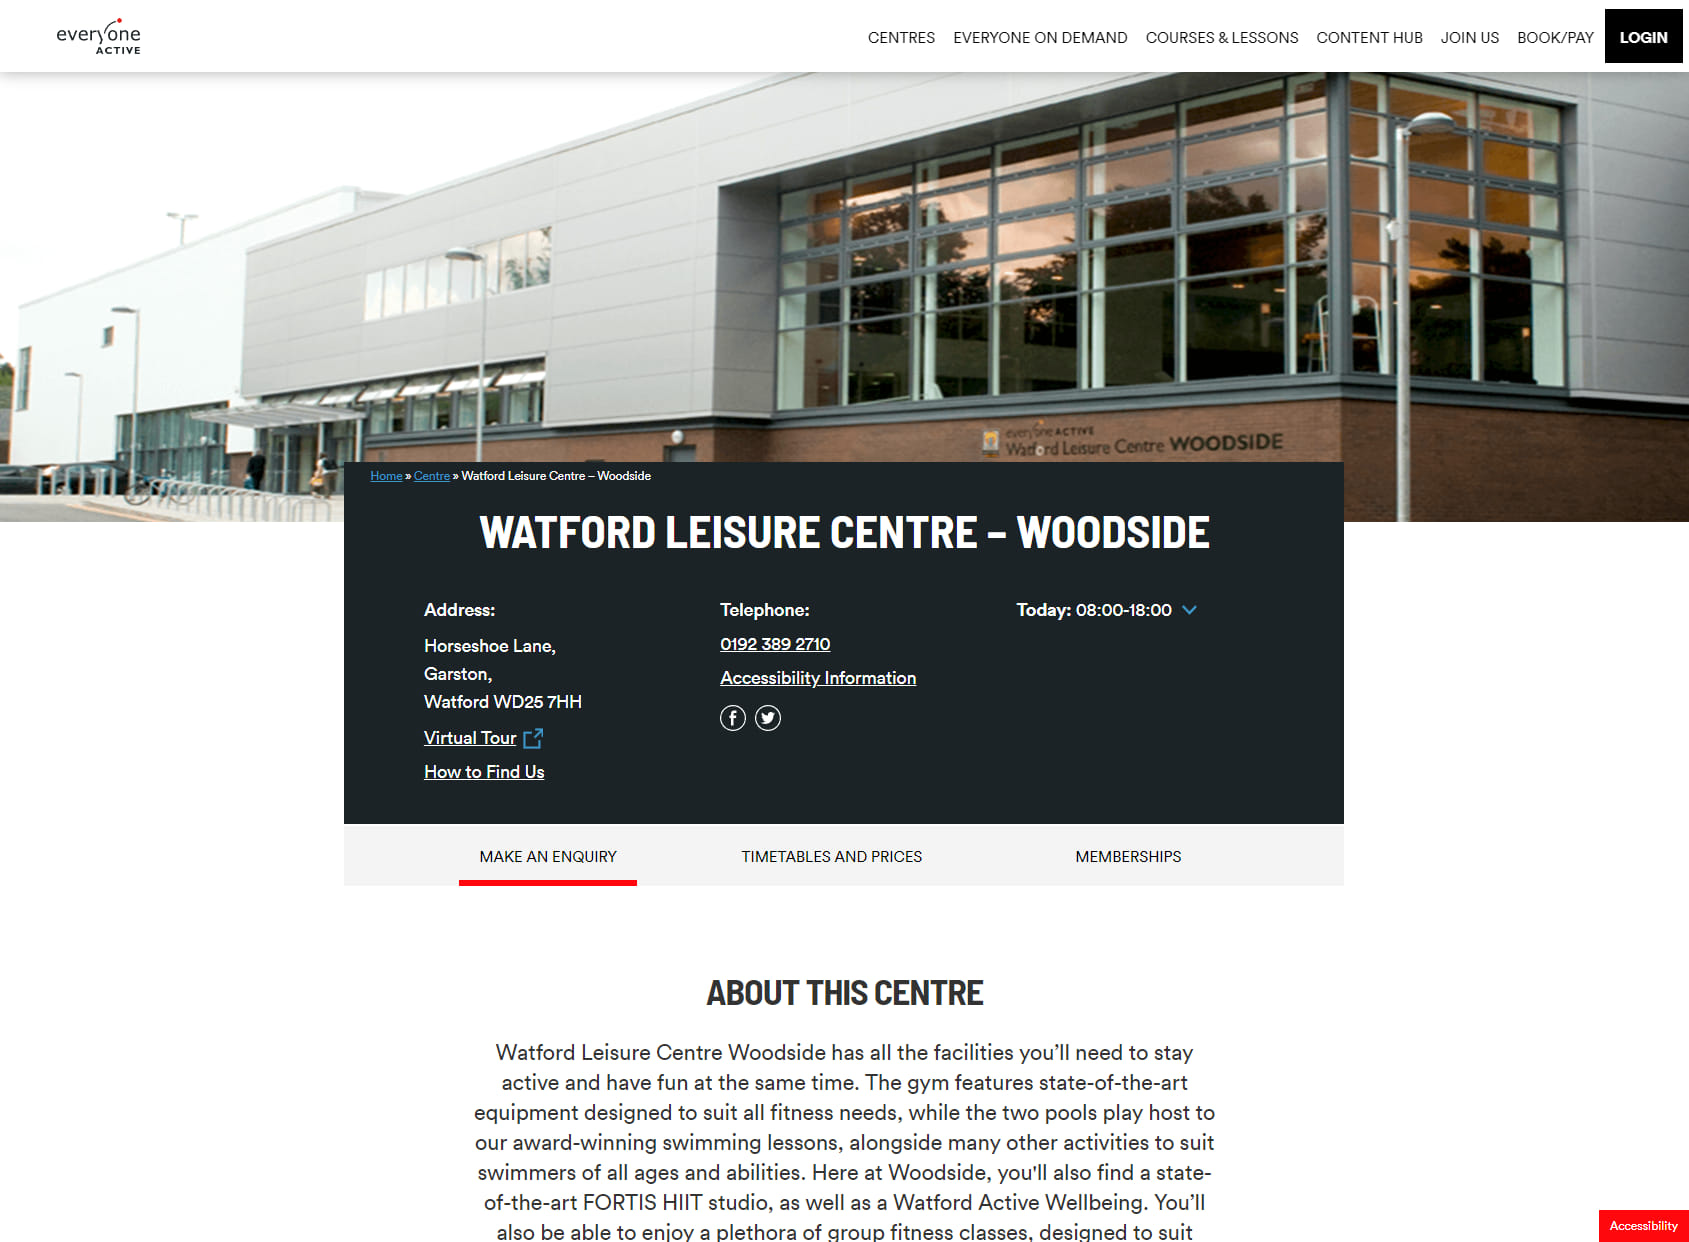 Watford Leisure Centre - Woodside